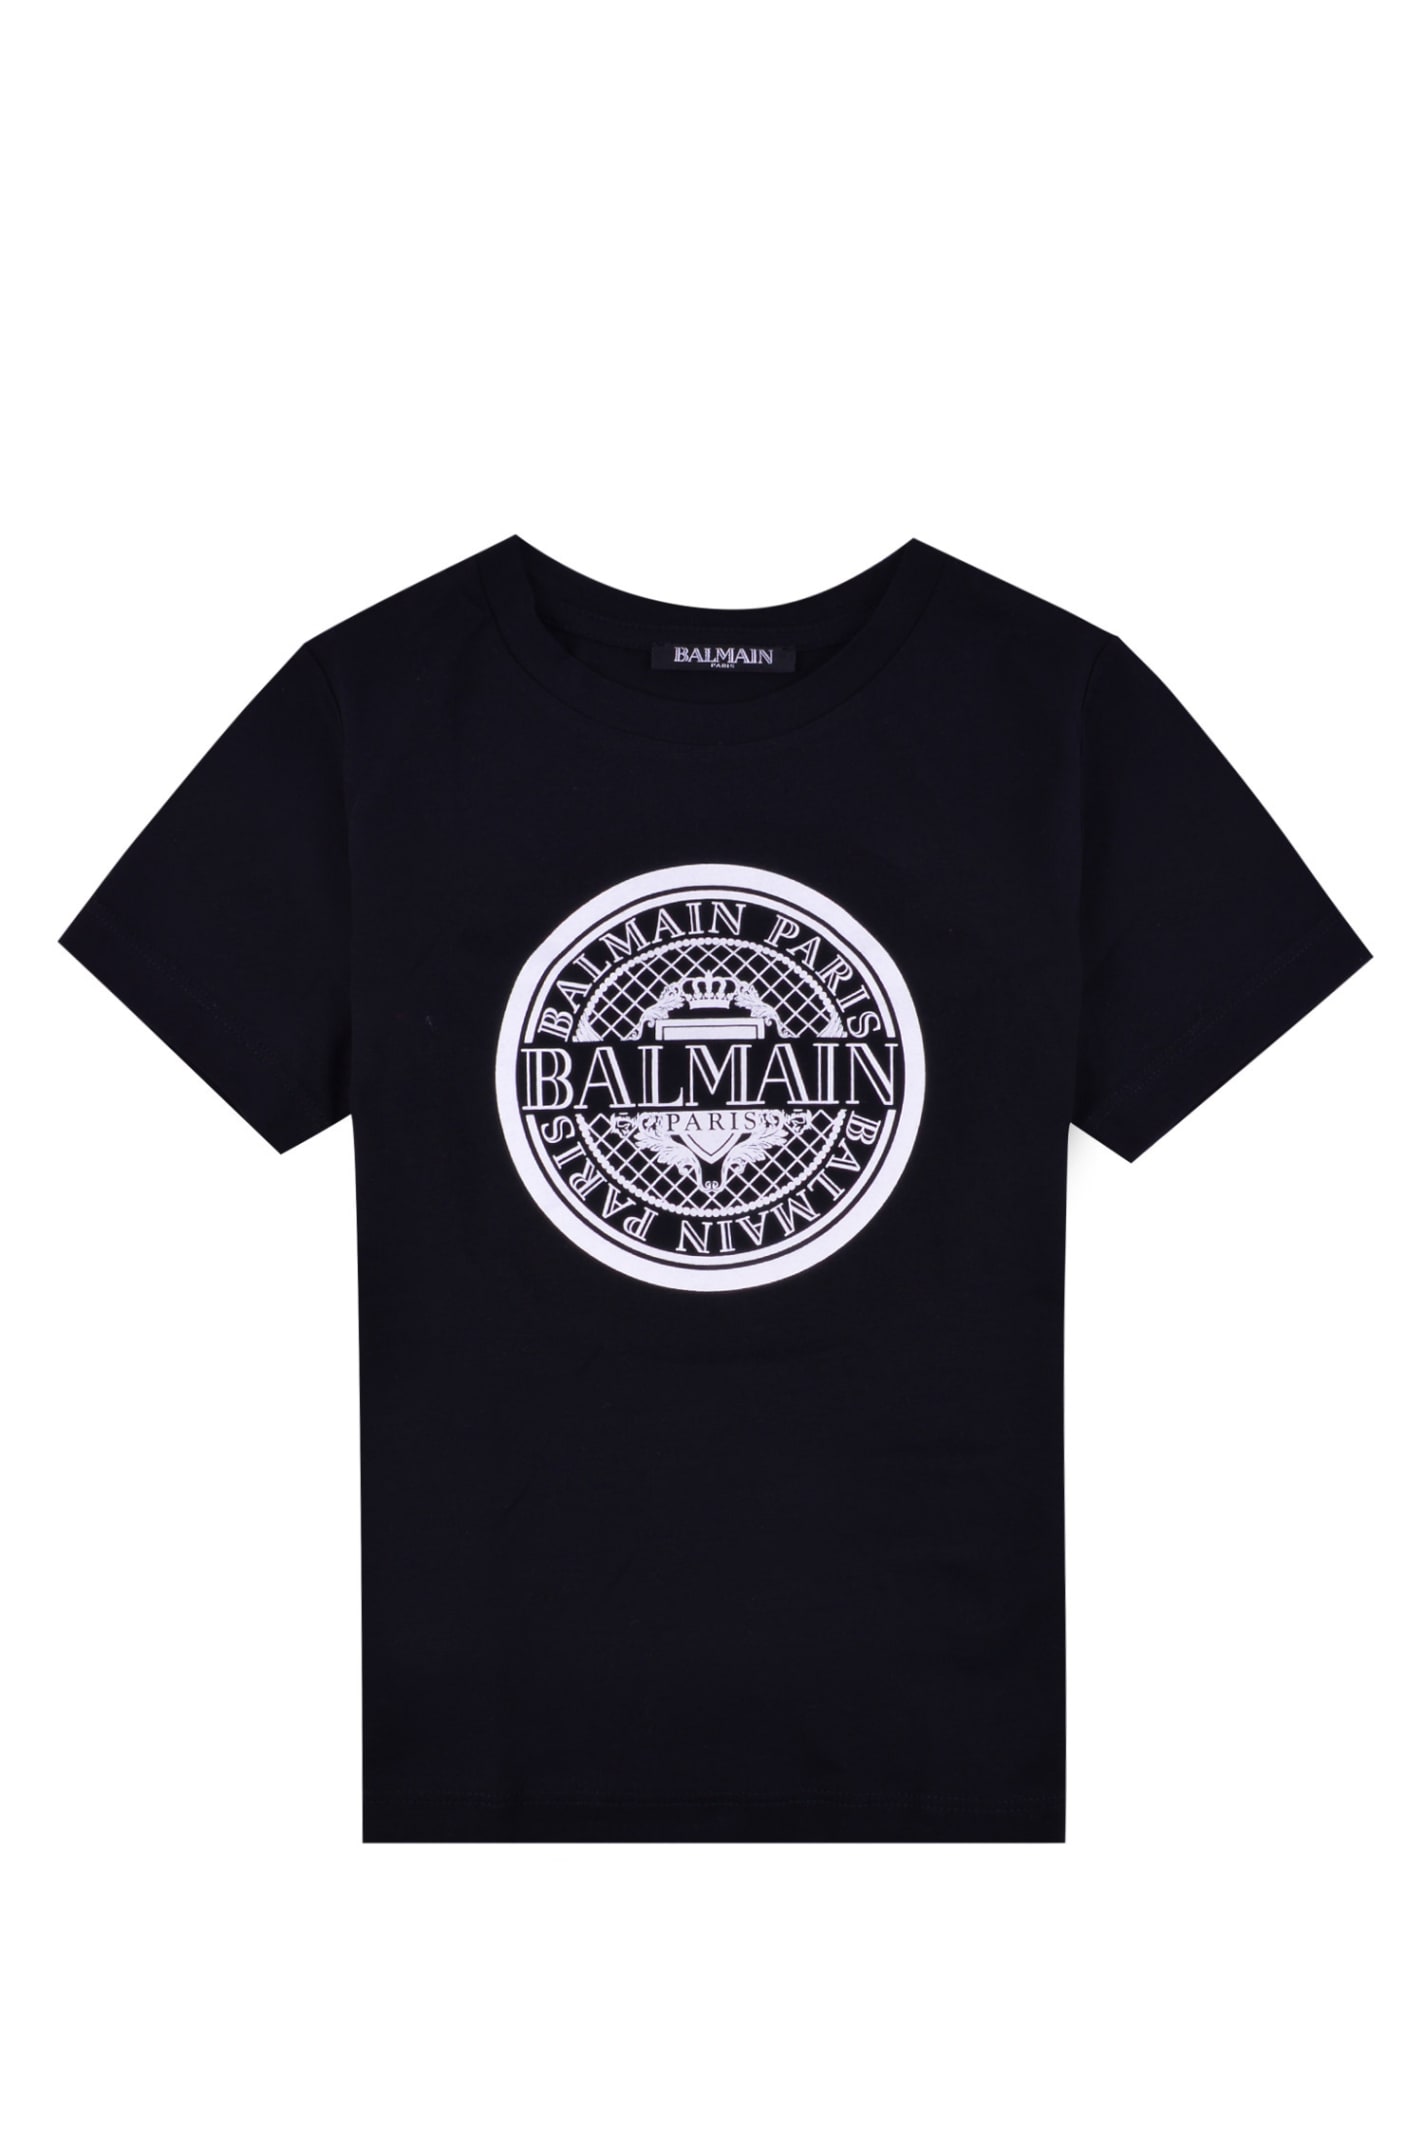 Balmain Kids' Cotton Jersey T-shirt In Back